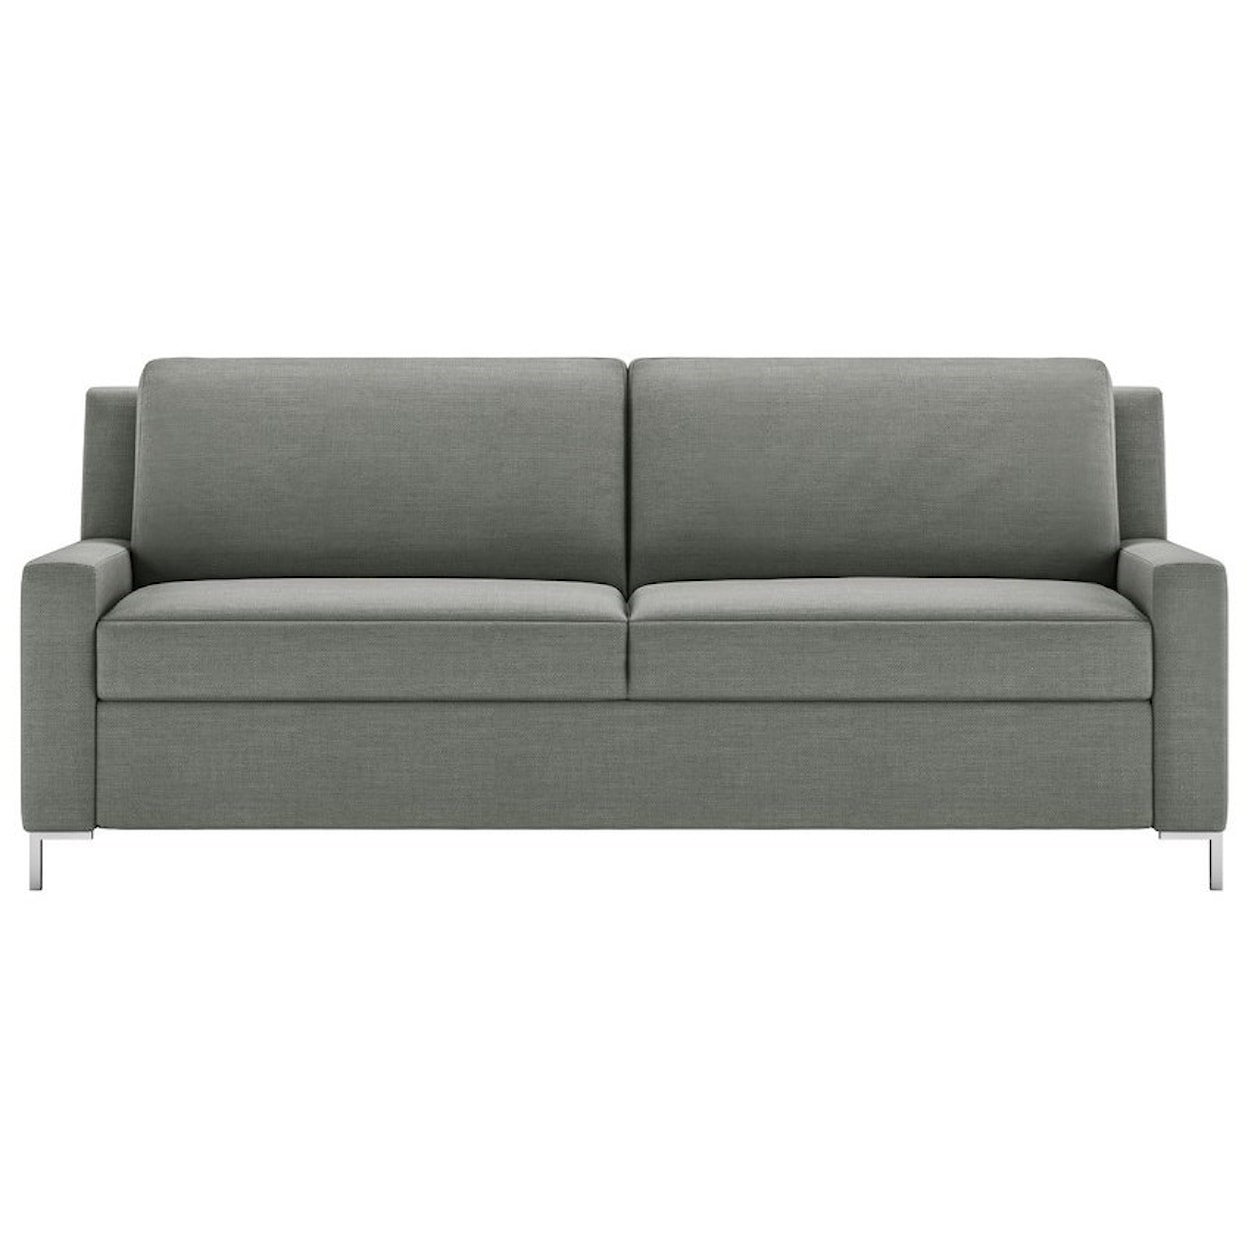 American Leather Bryson Queen Sleeper Sofa